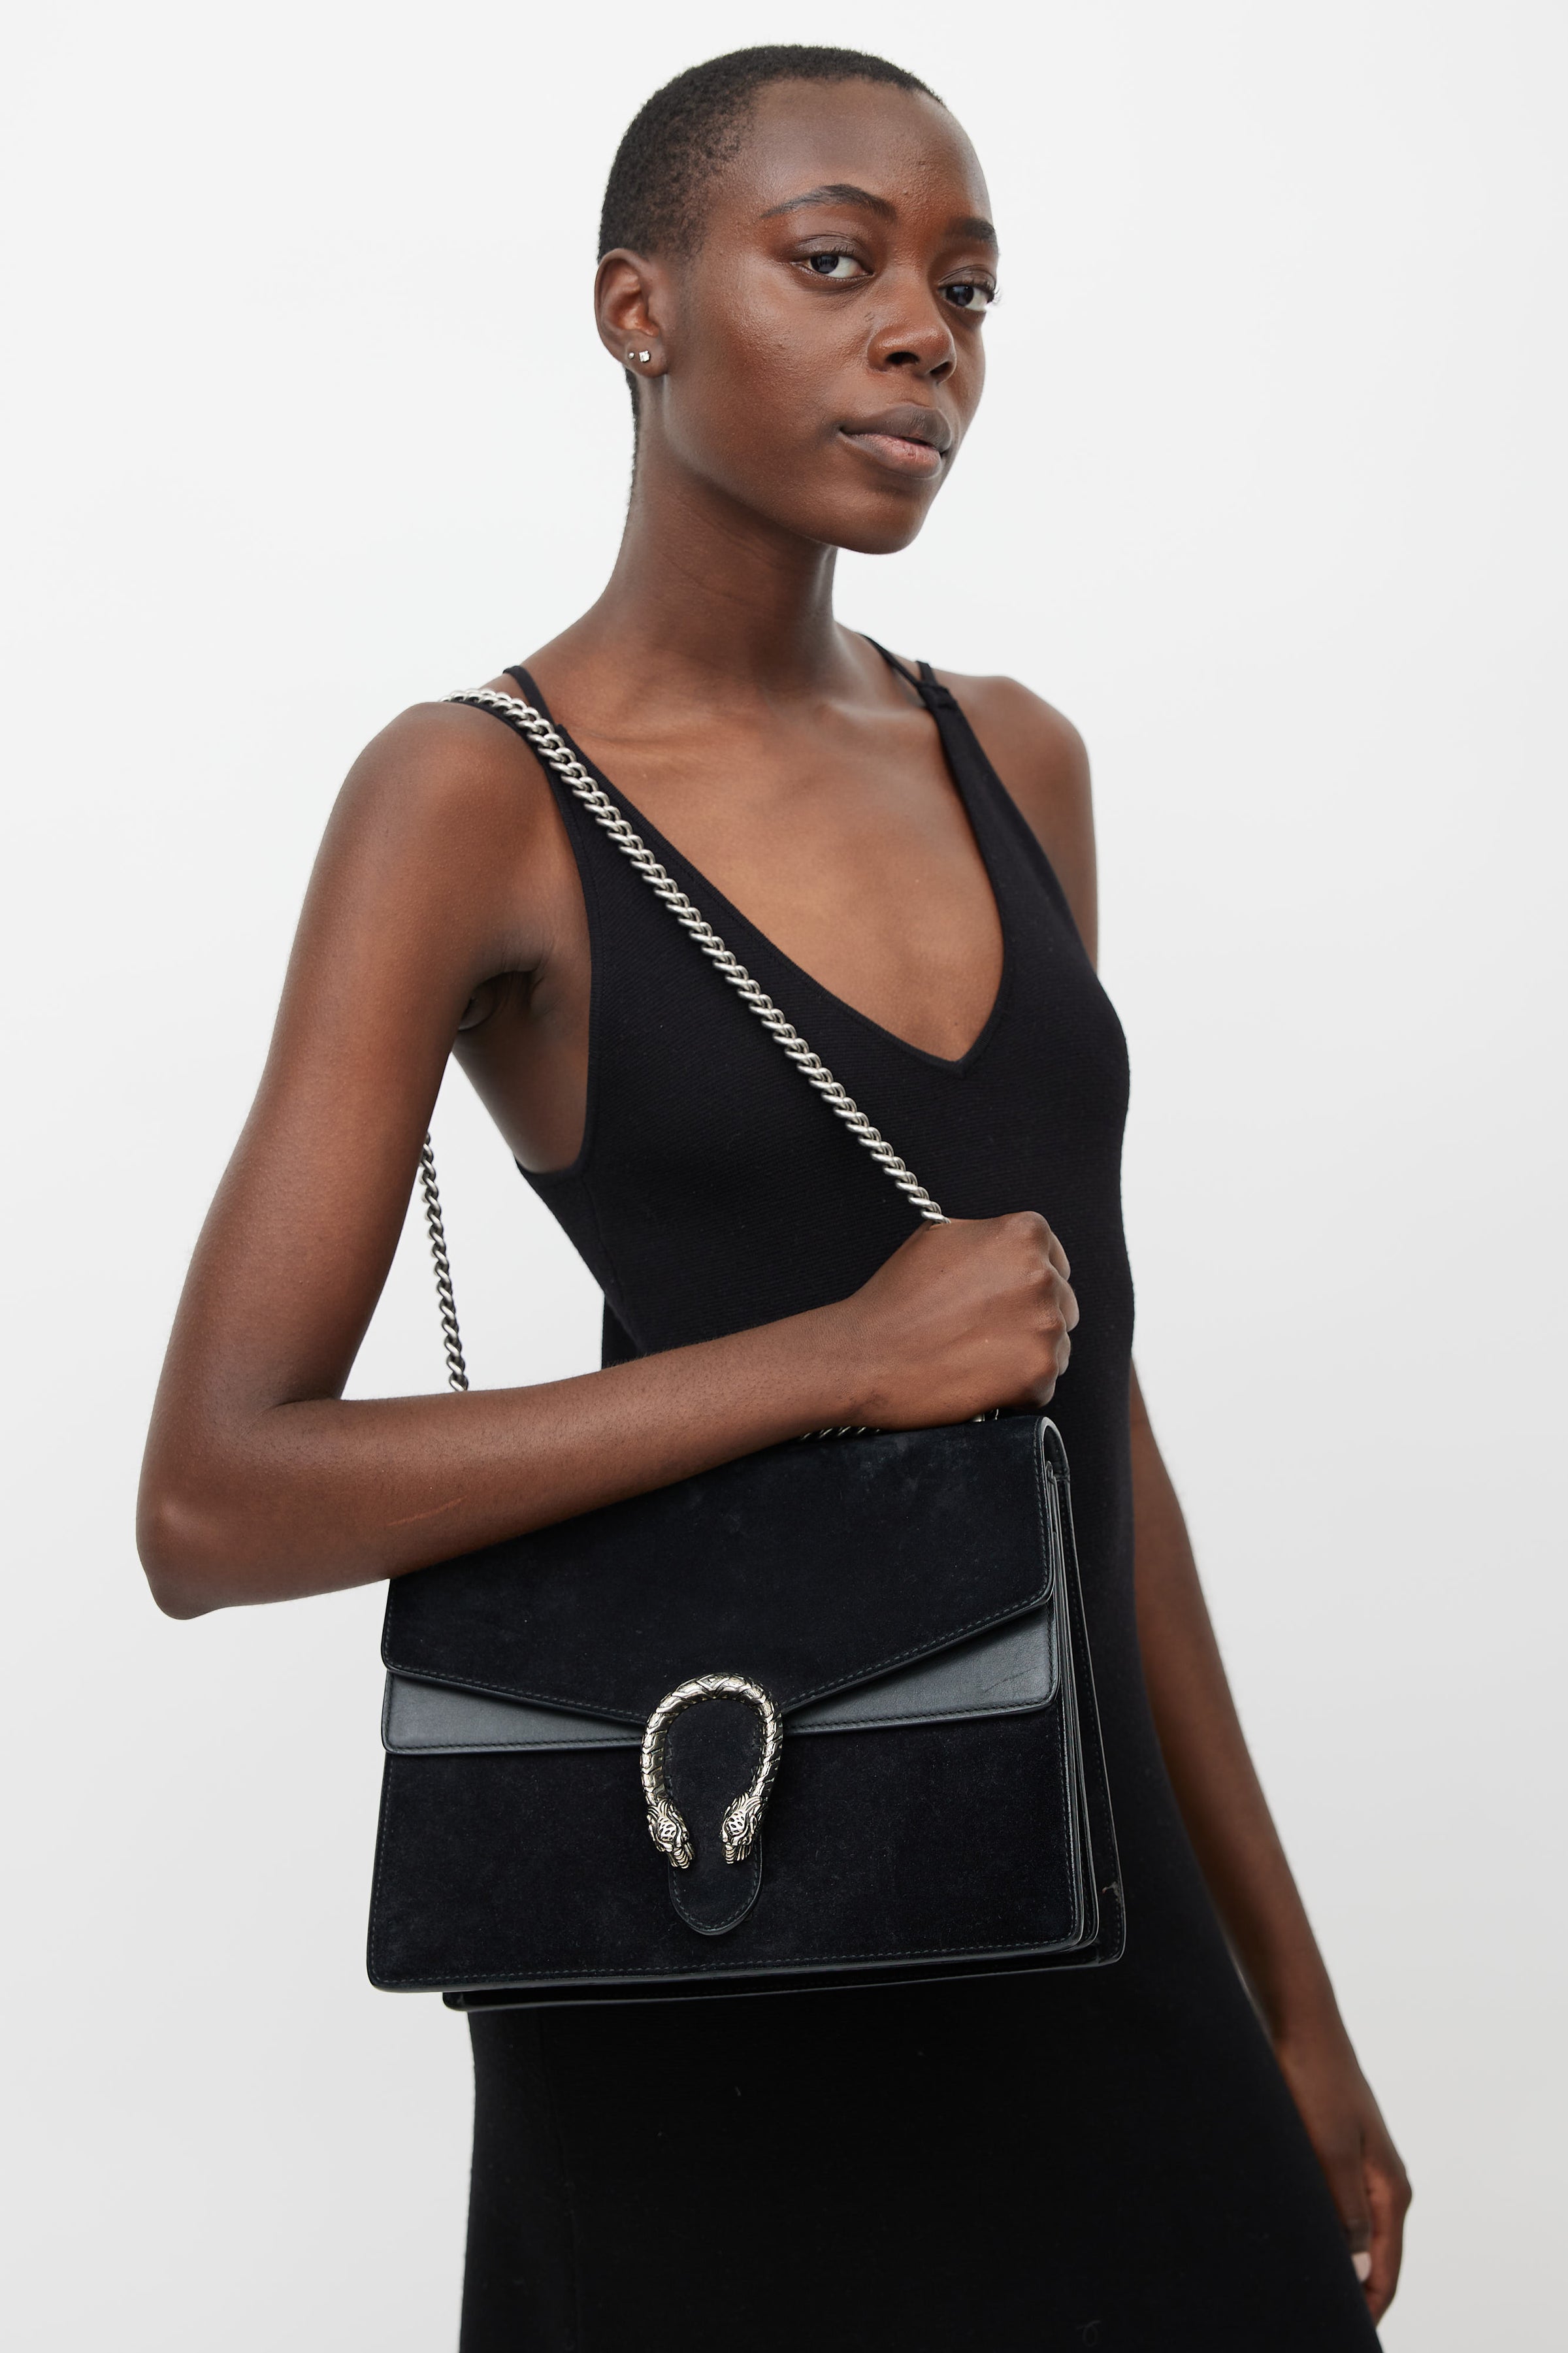 Gucci Dionysus Medium Suede Shoulder Bag in Black